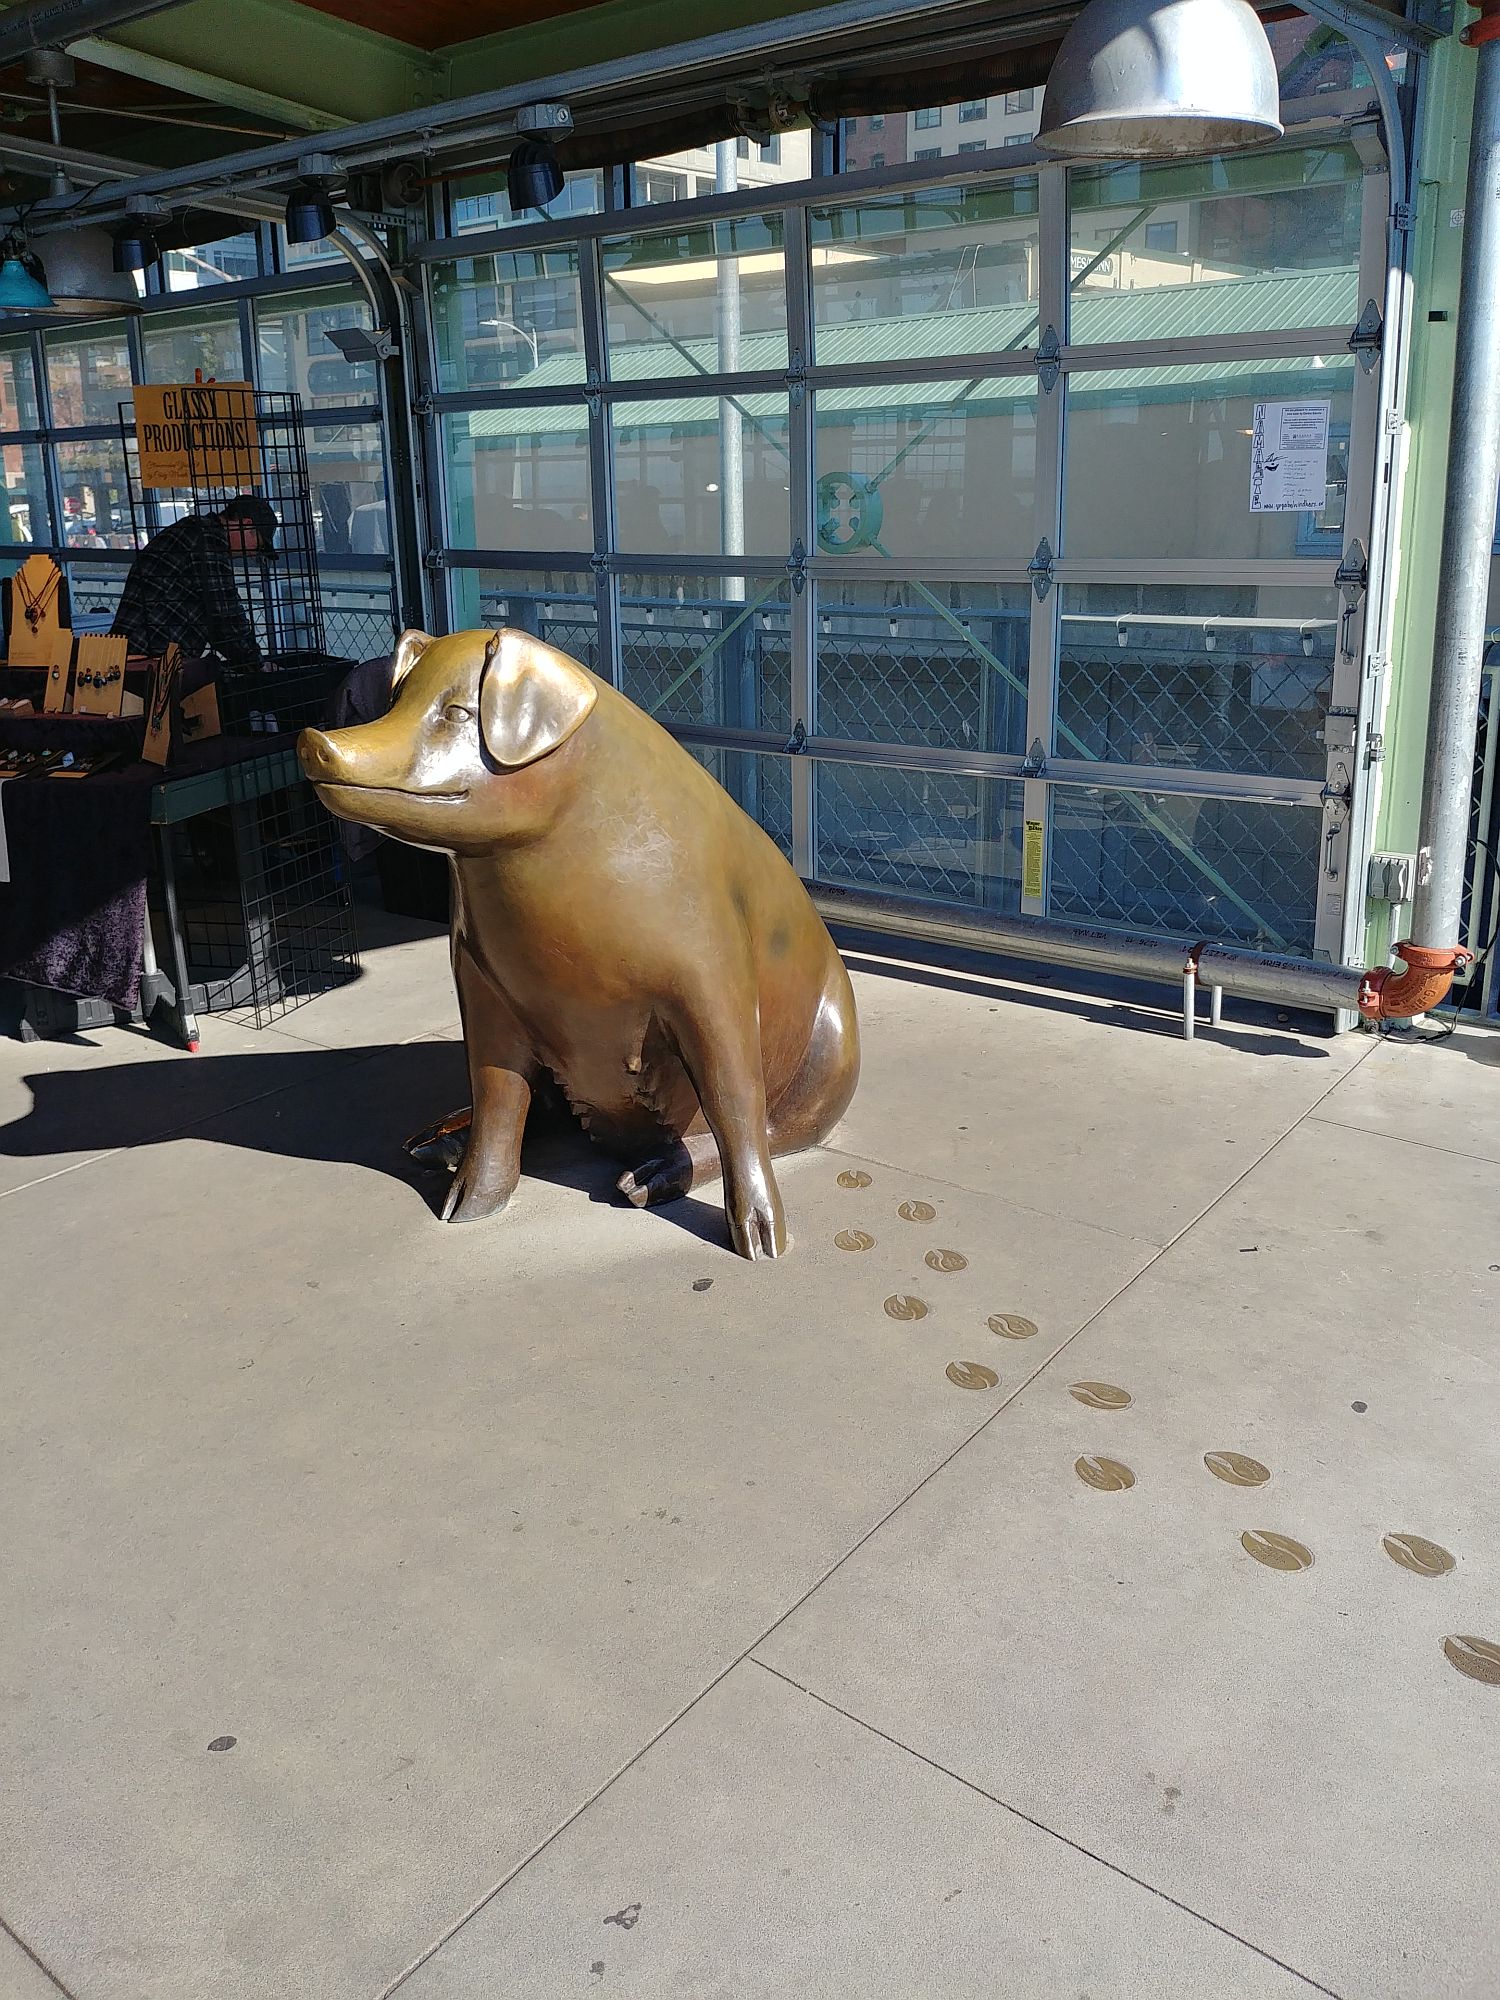 Pike Place Market - 07 - Piggy bank